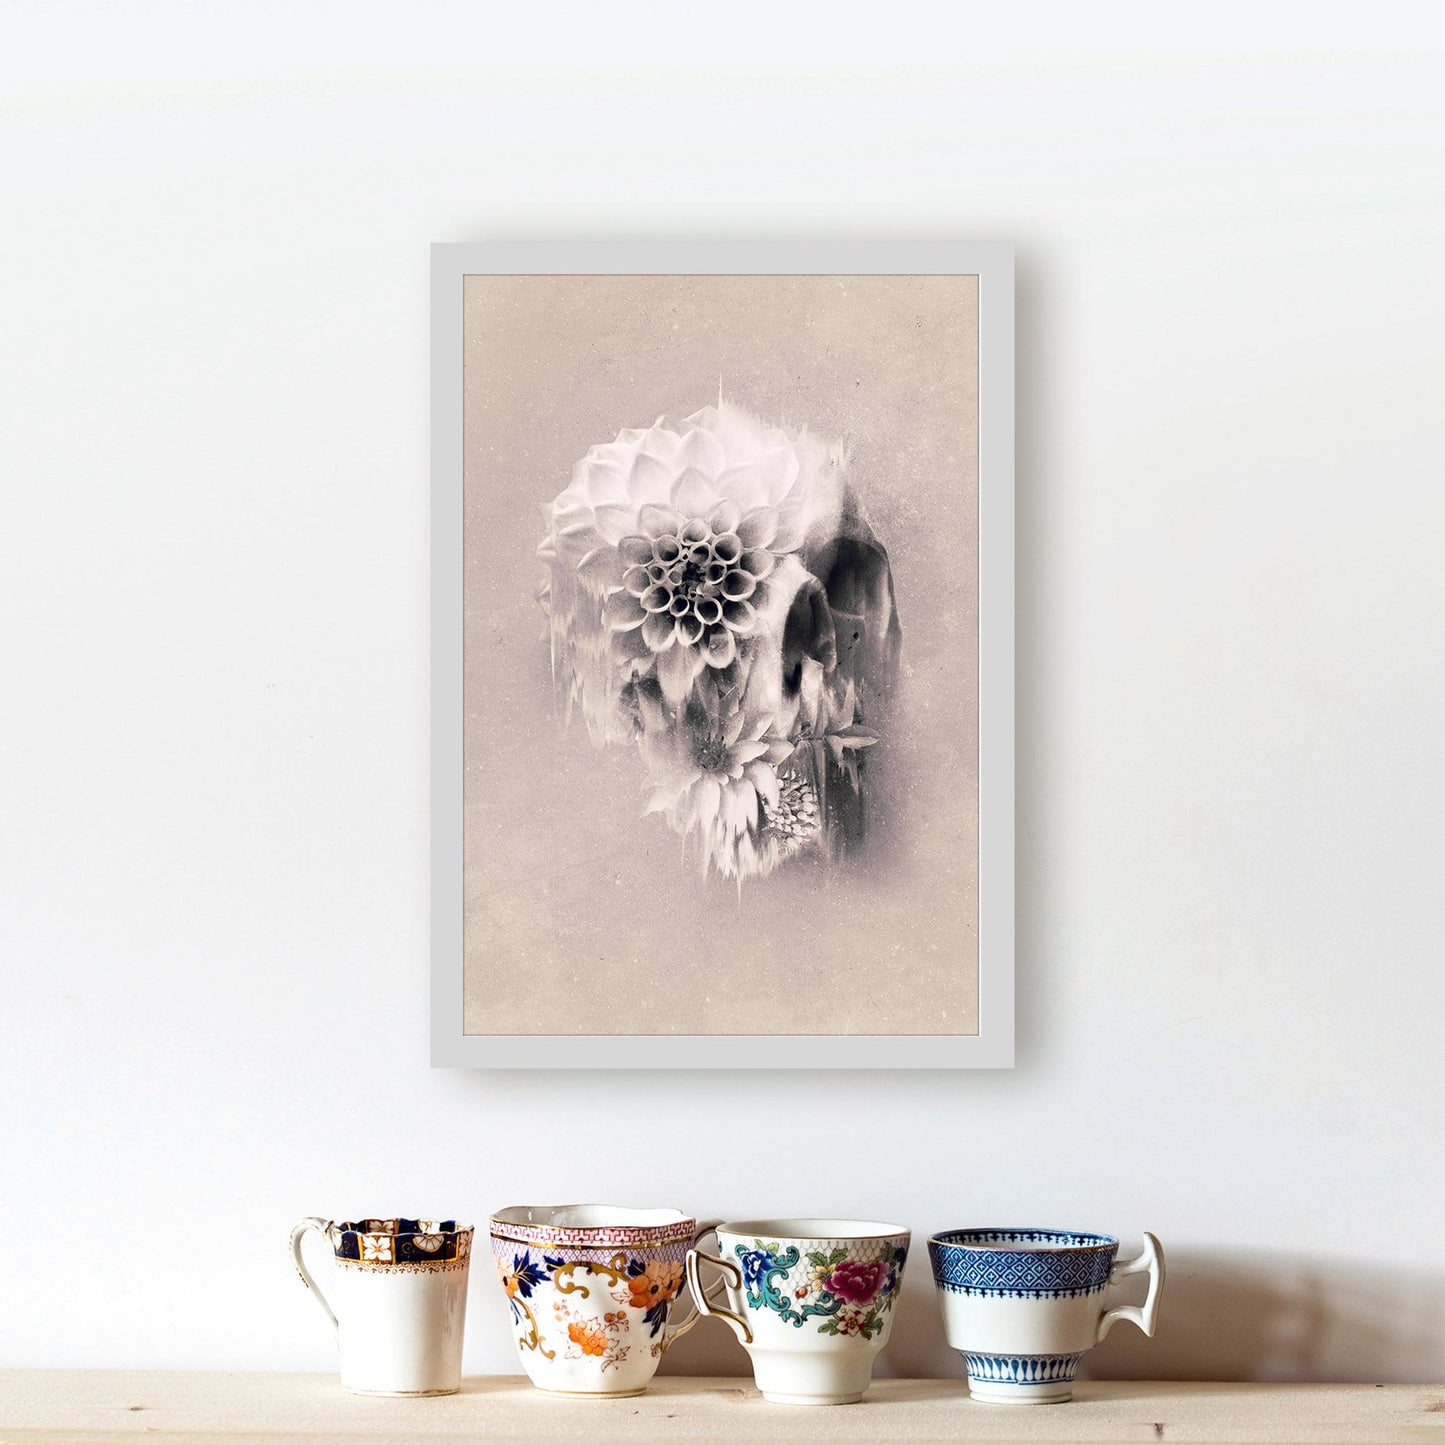 Decay Skull Poster, Sugar Skull Art Print, Flower Skull Poster Wall Art Gift, Light Tones Floral Skull Art Home Decor, Drawing by Ali Gulec